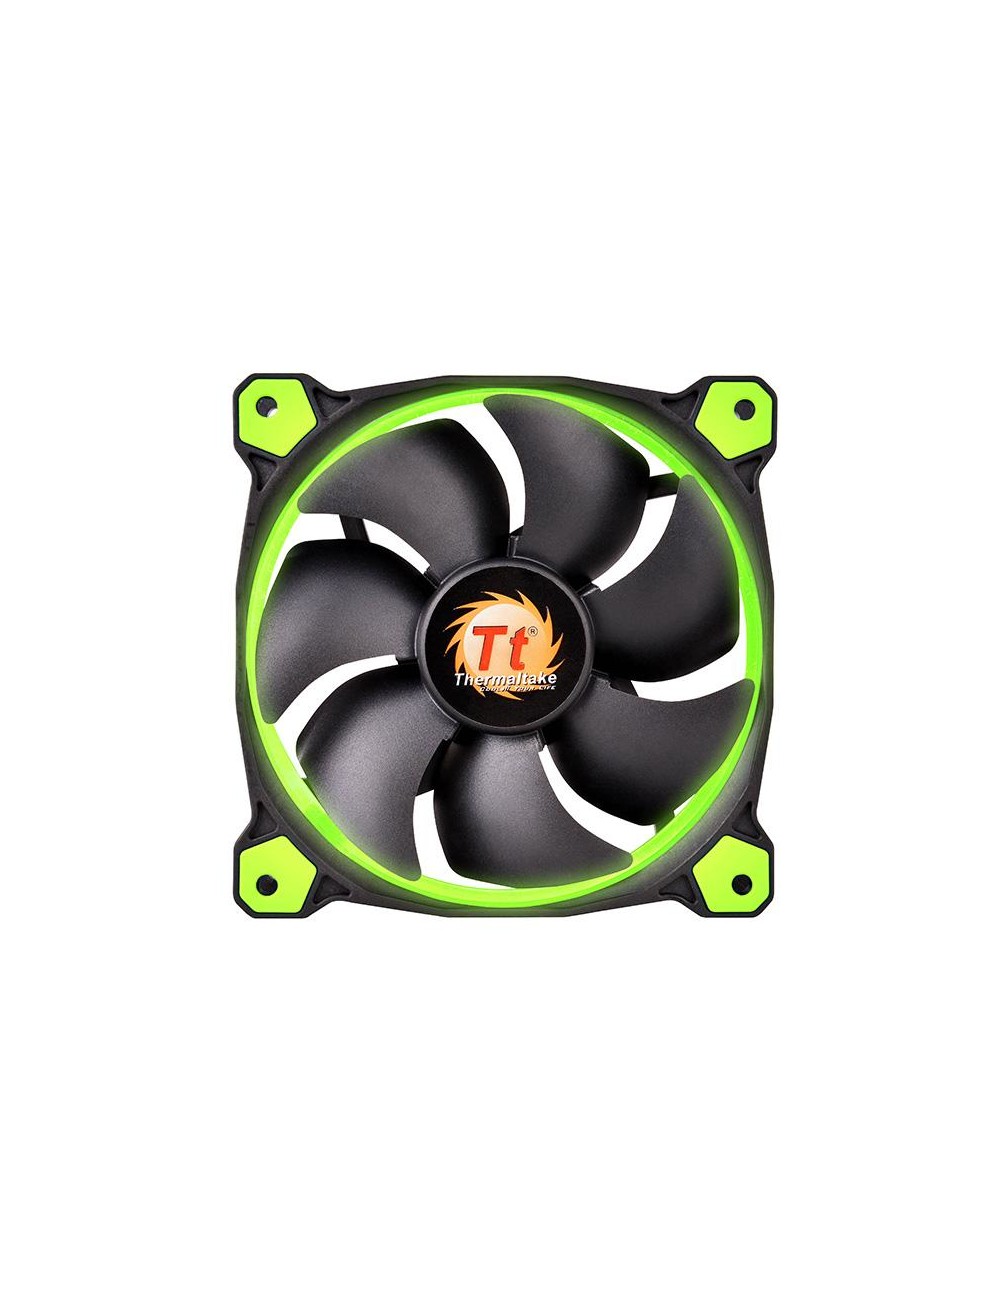 thermaltake-riing-12-case-per-computer-ventilatore-cm-nero-verde-1.jpg